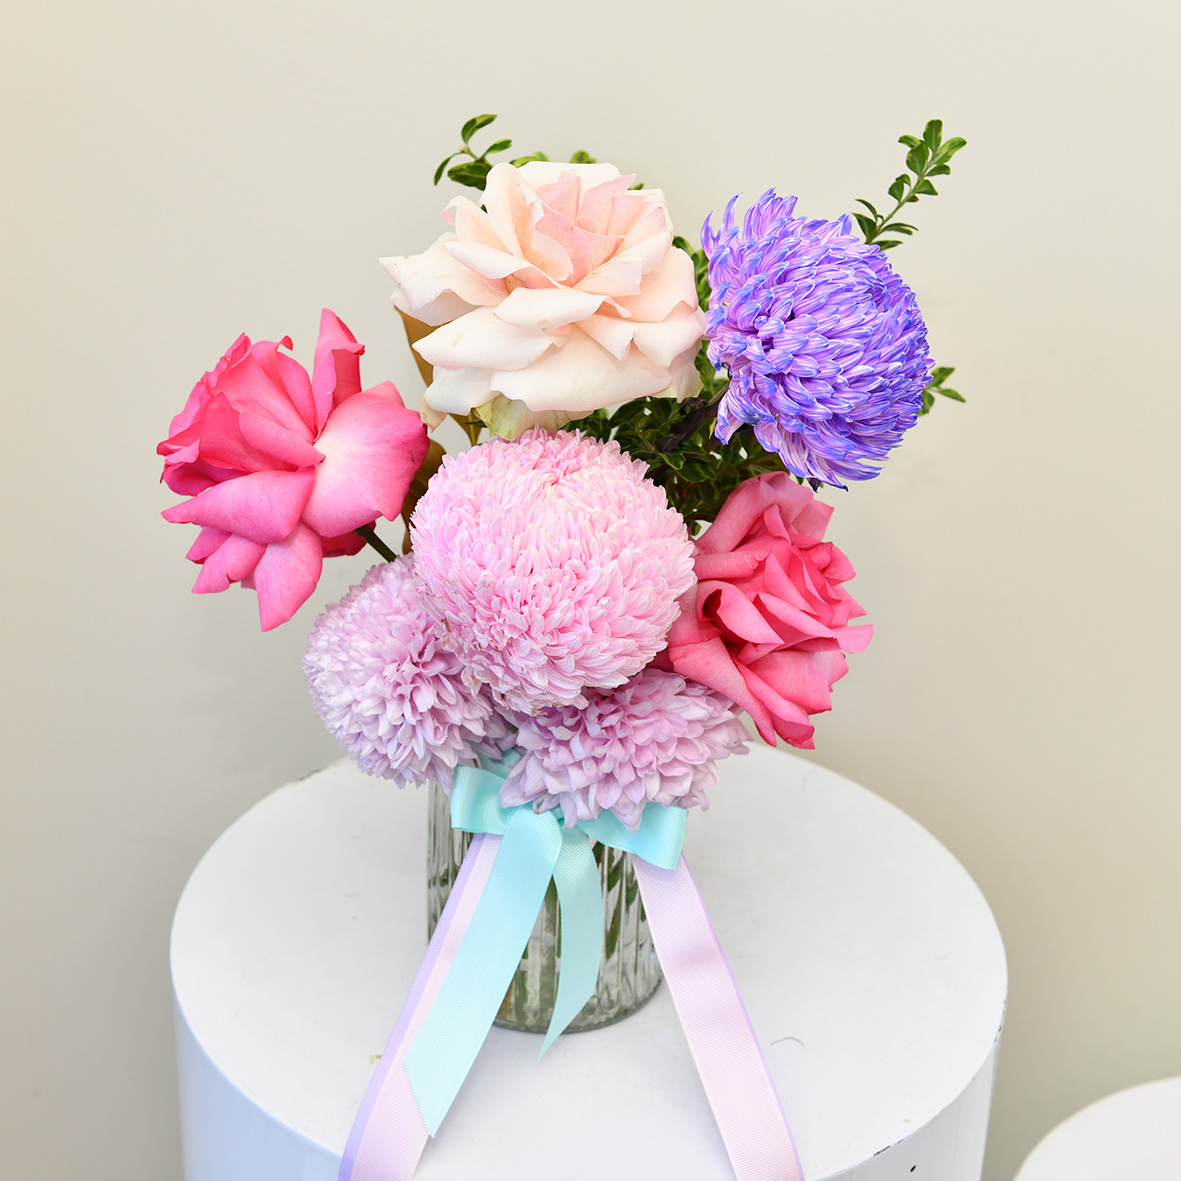 Best flower arrangements sydney in a vase